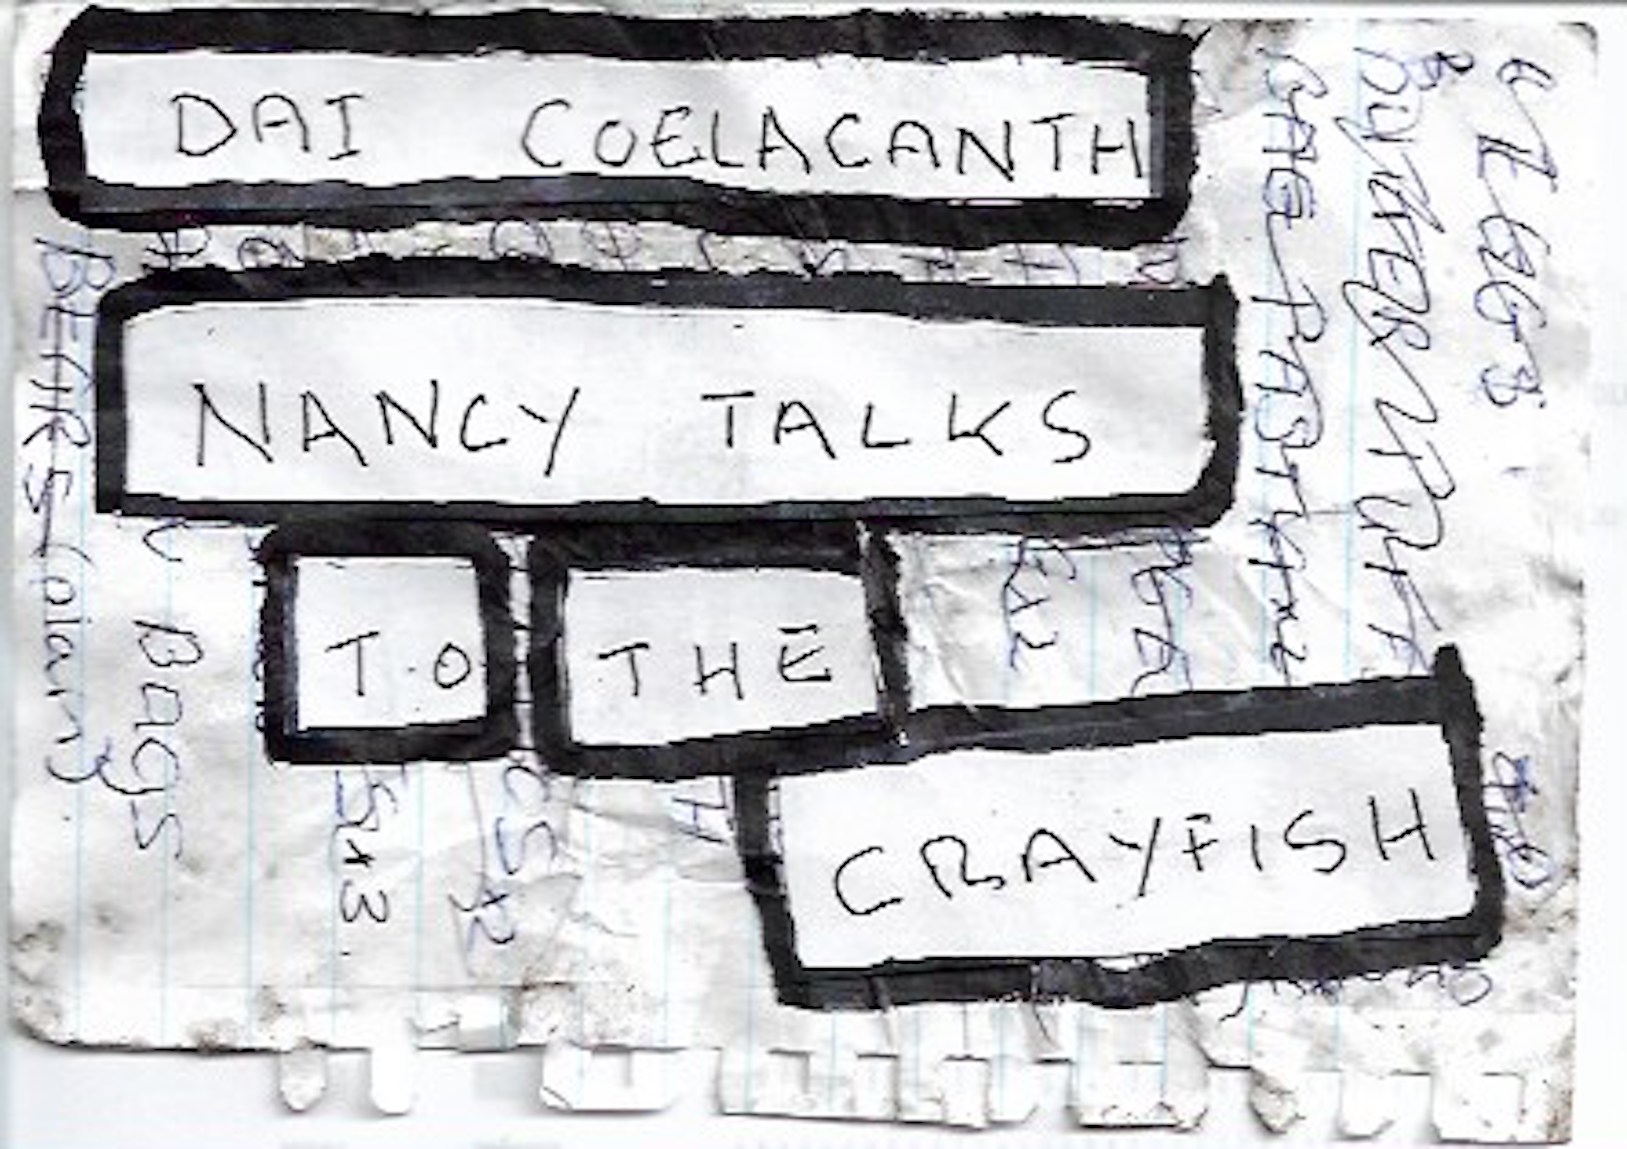 Dai Coelacanth – Nancy talks to the Crayfish